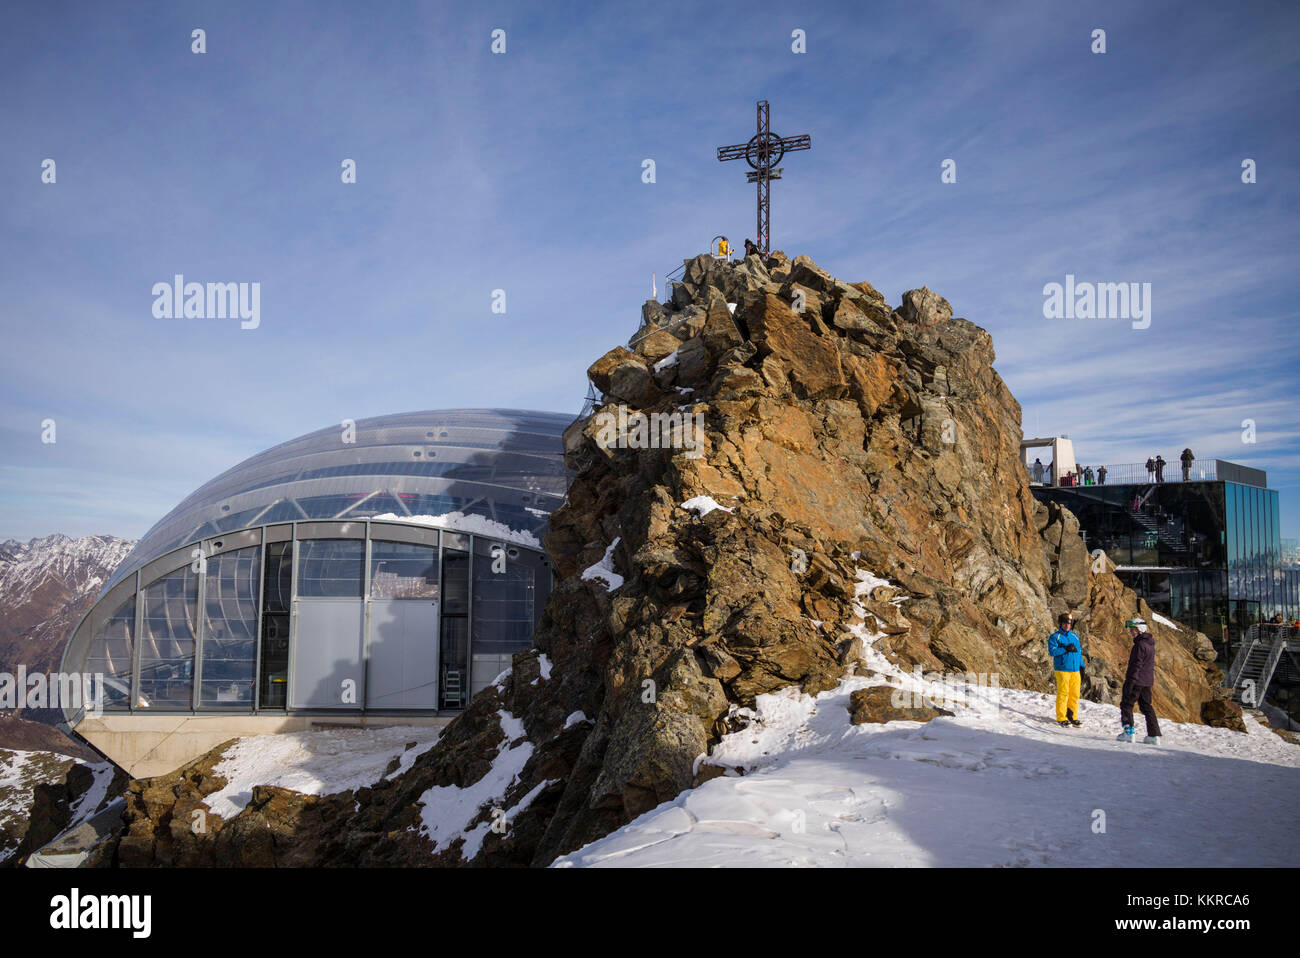 Austria, Tyrol, Otztal, Solden, Gaislachkogl ski mountain, Gaislachkogl Summit, elevation 3058 meters, tram station and Ice Q gourmet restaurant, winter Stock Photo